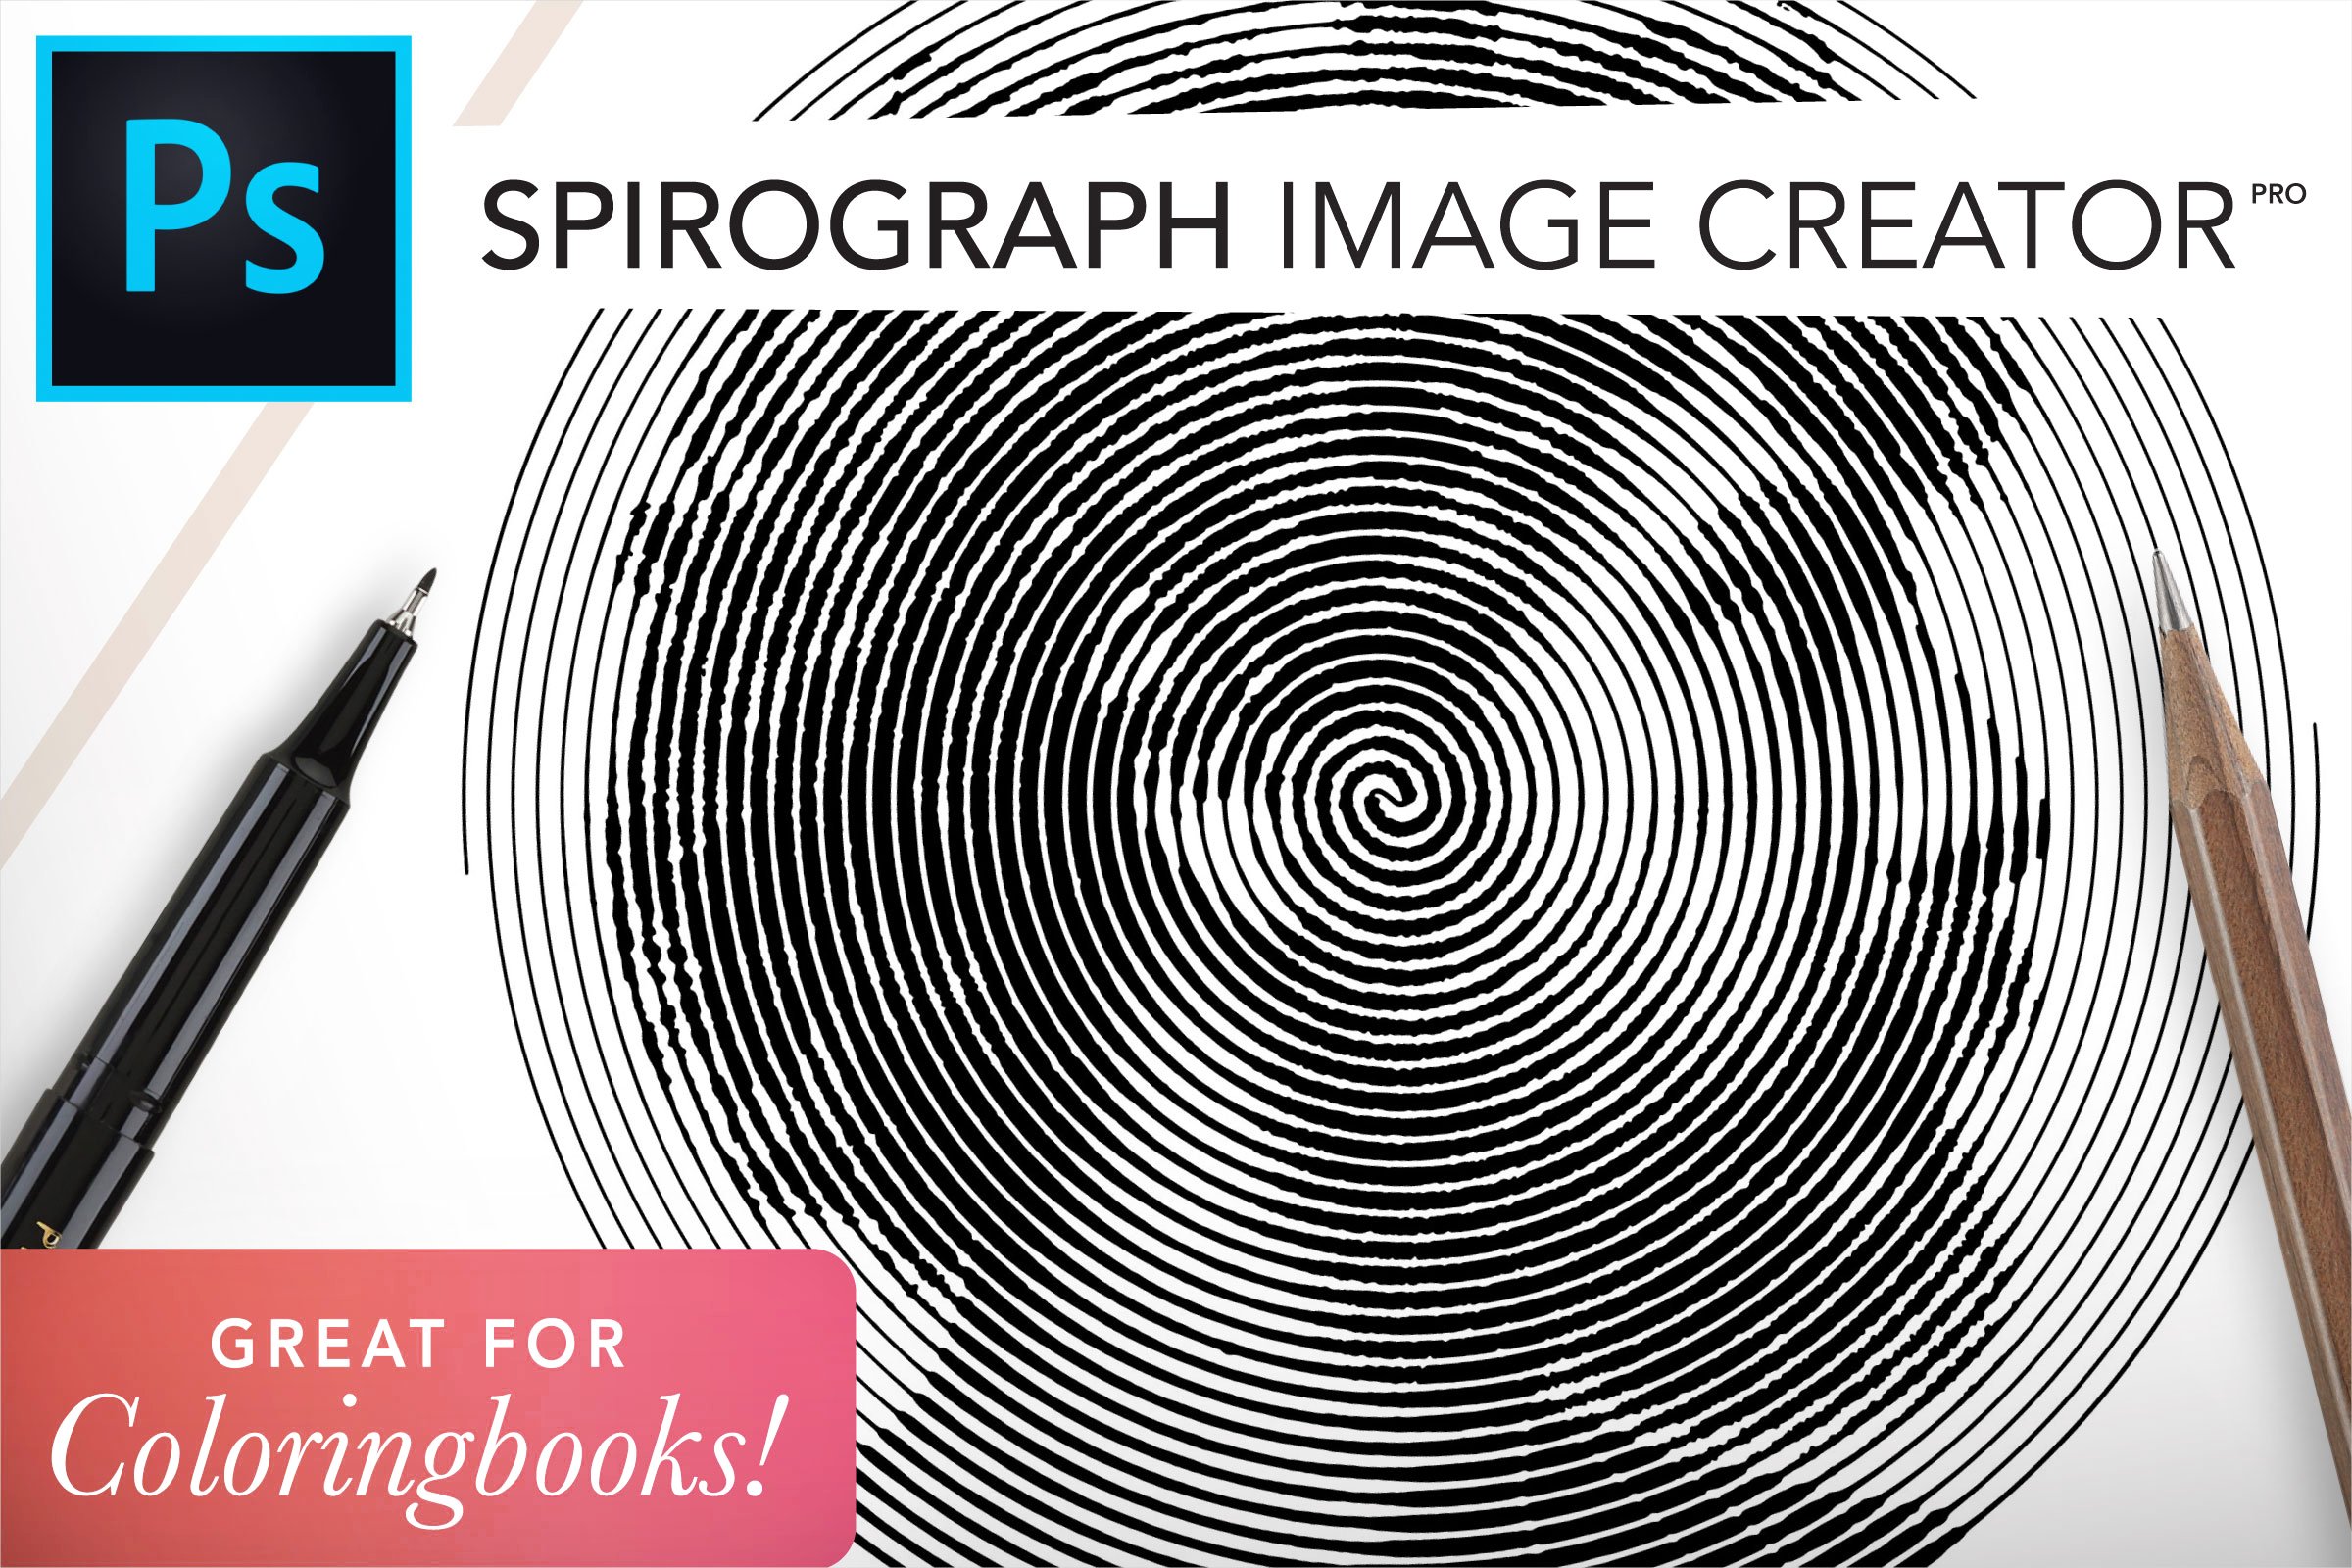 Spirograph Creator for Coloringbookscover image.